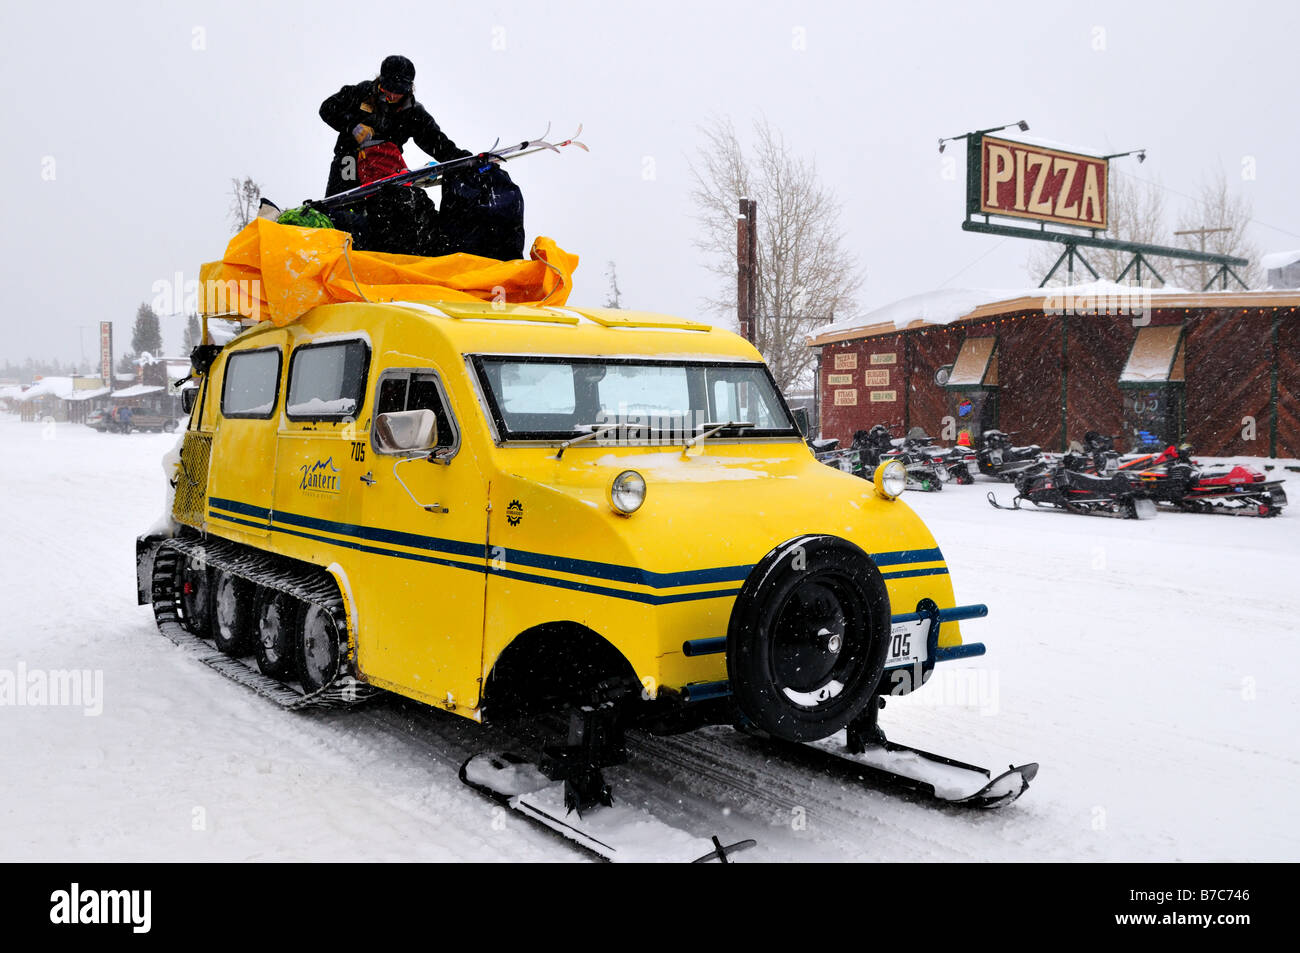 Loading up the snow coach. West Yellowstone, Montana, USA. Stock Photo